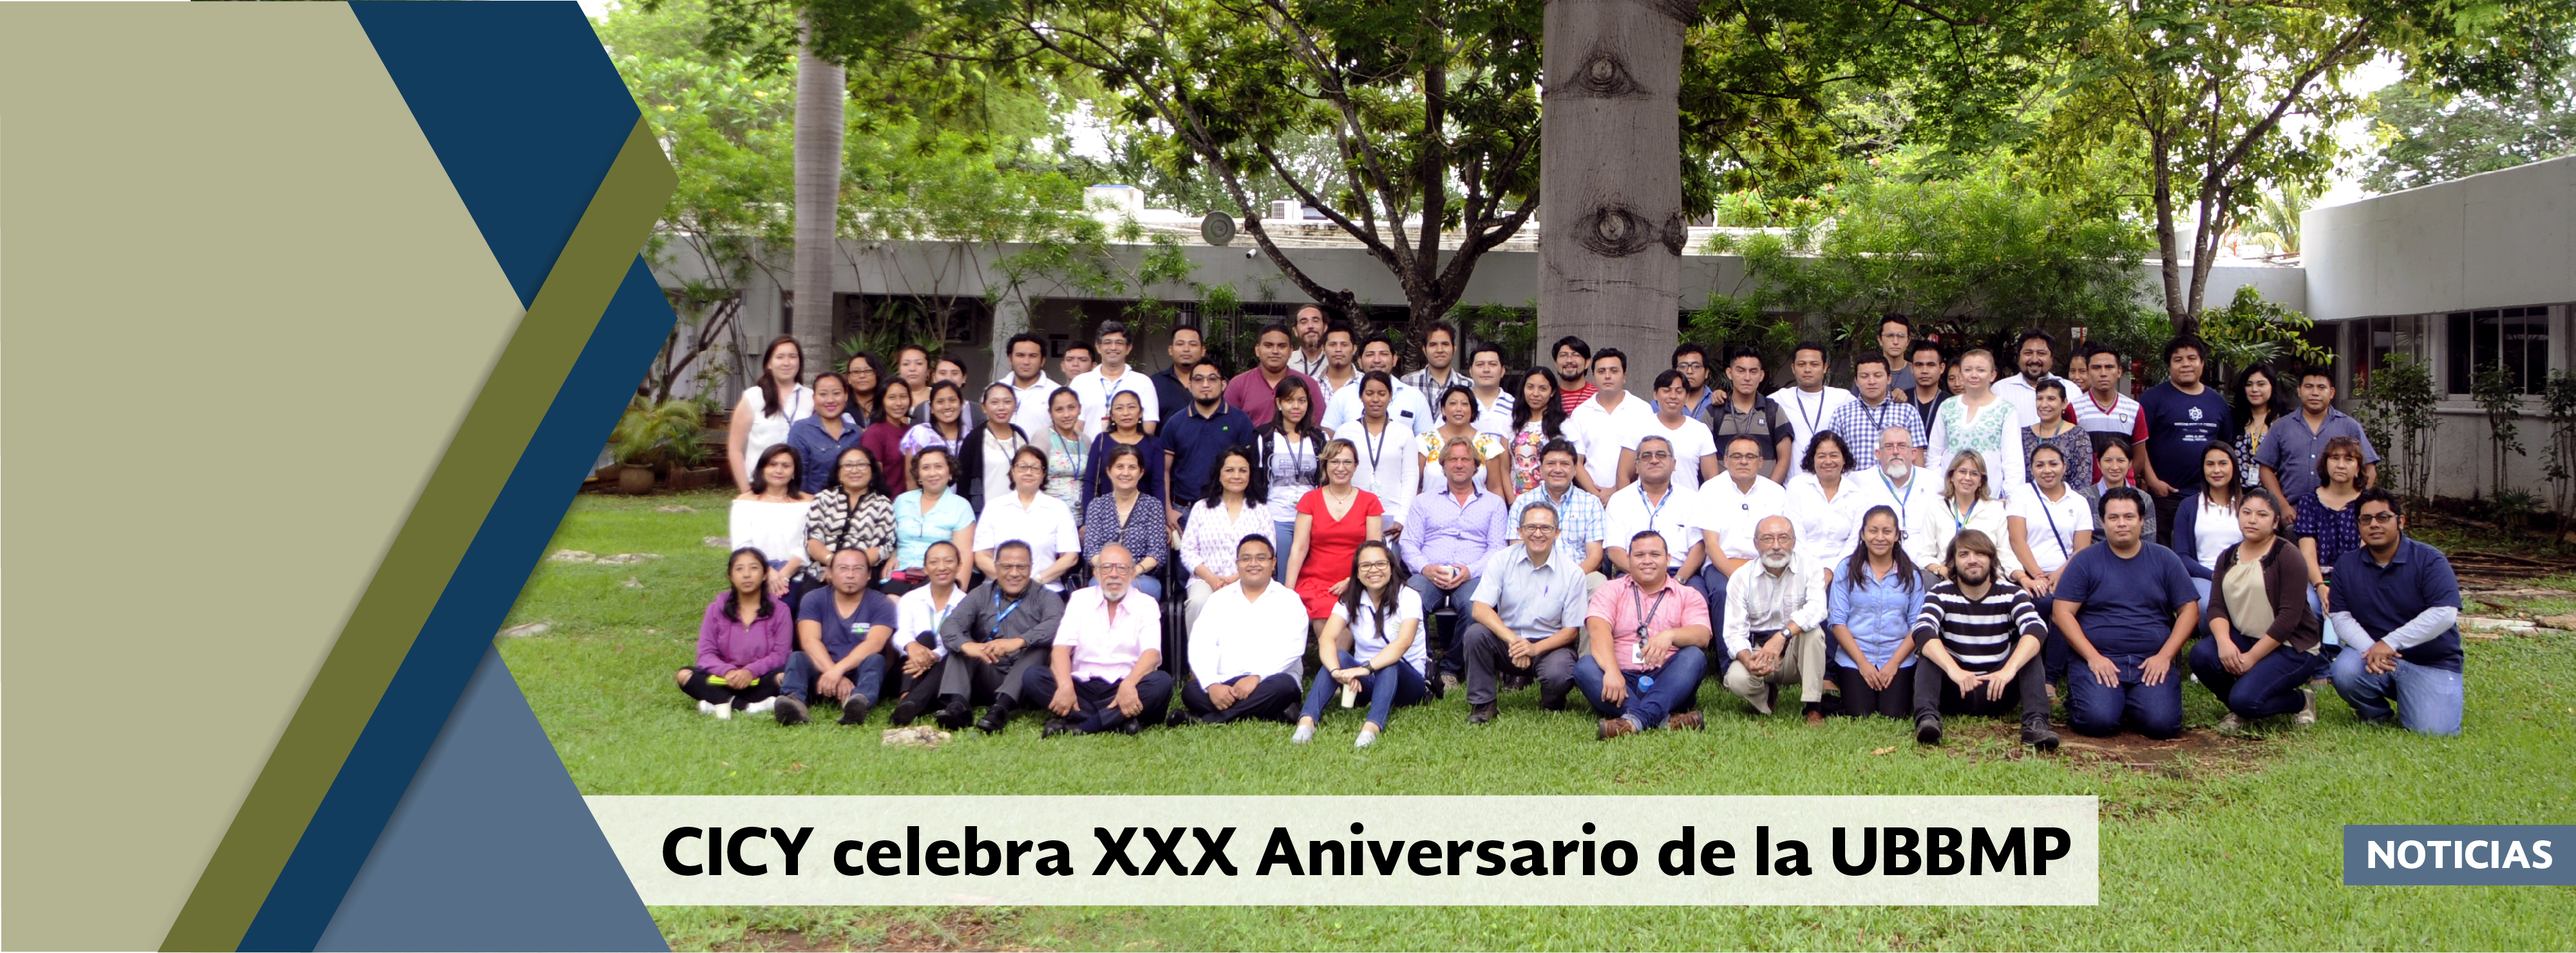 CICY celebra XXX Aniversario de la UBBMP